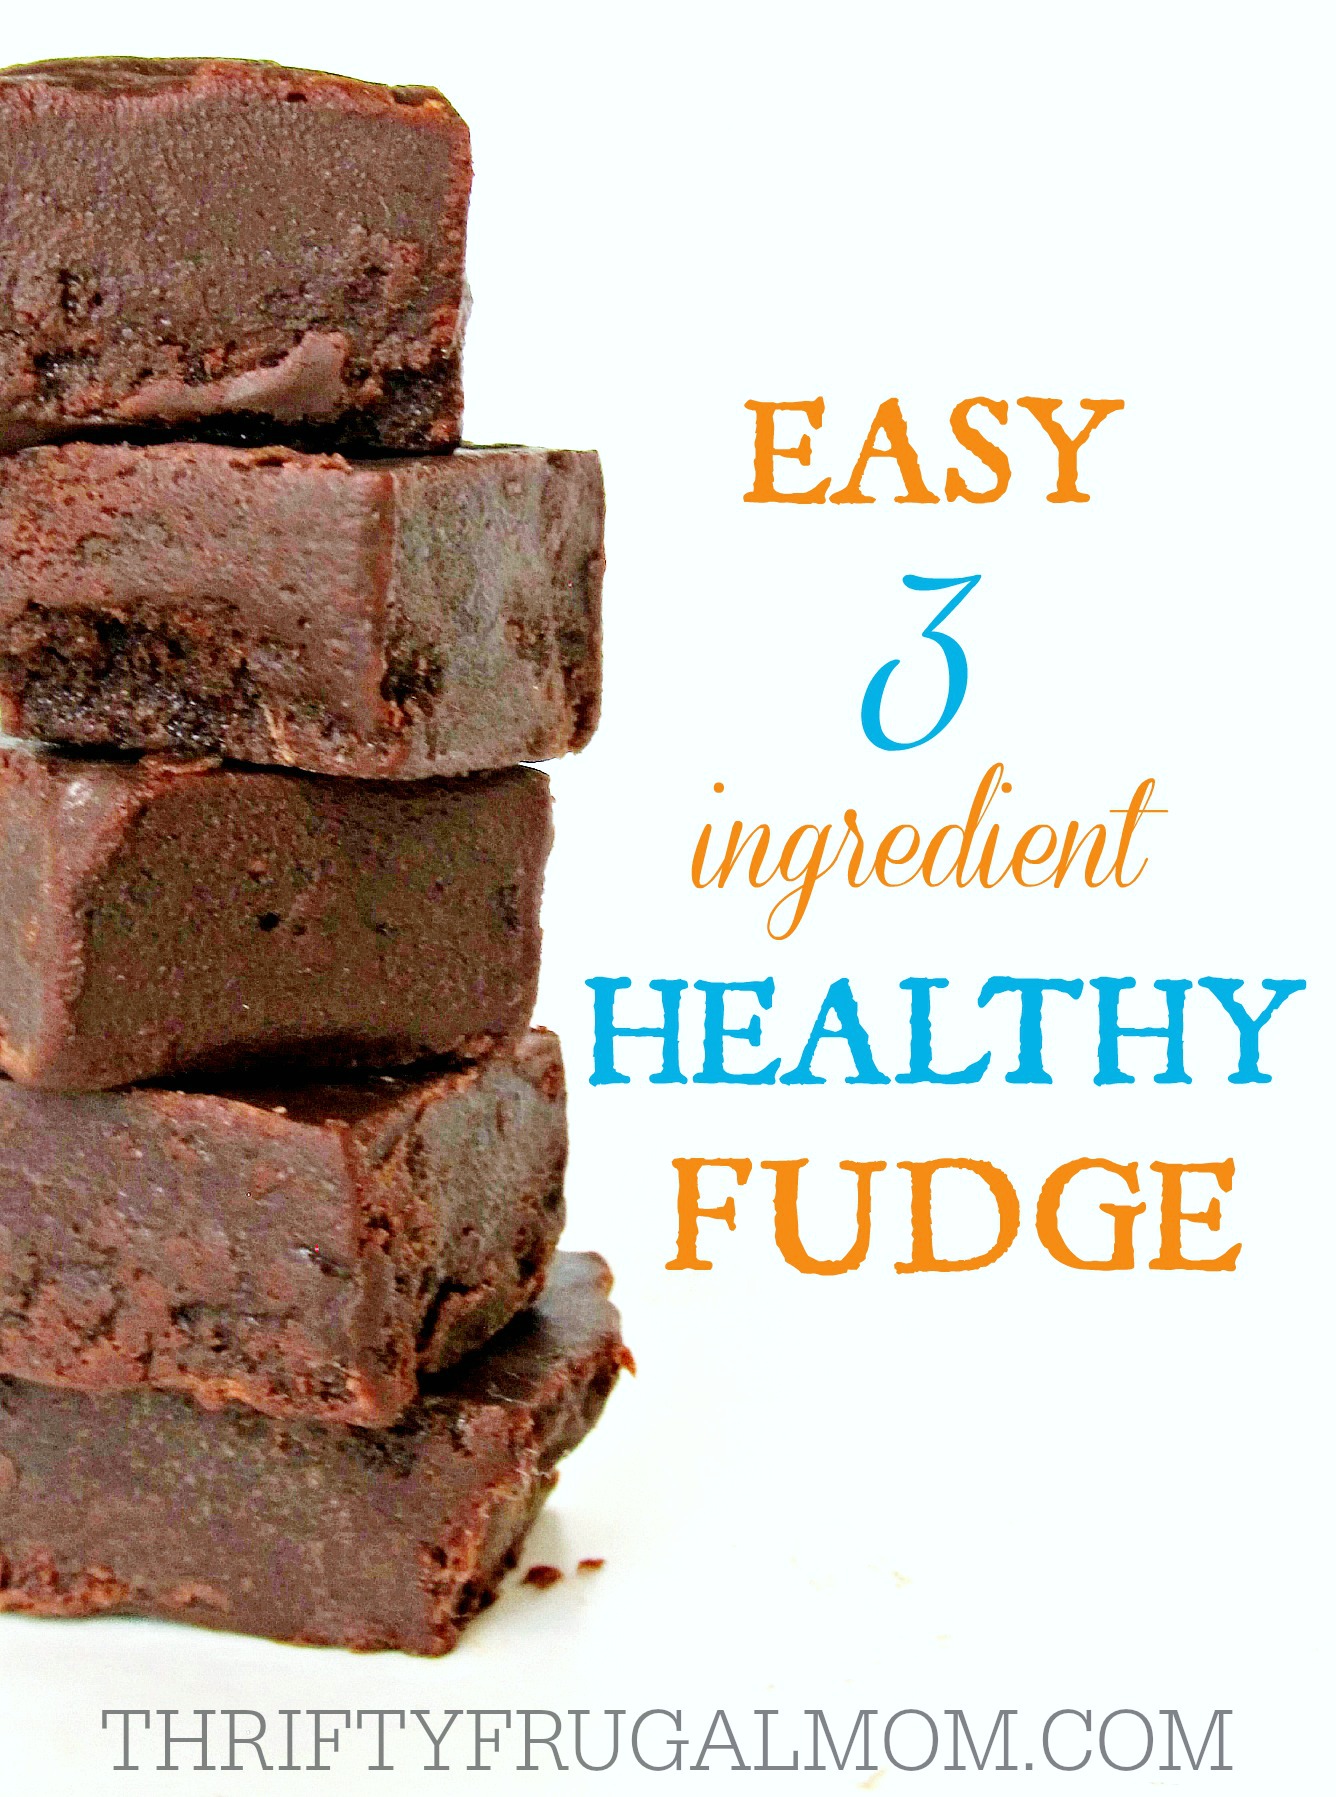 http://thriftyfrugalmom.com/recipe-easy-3-ingredient-healthy-fudge/#sthash.fWgTb0RR.dpbs